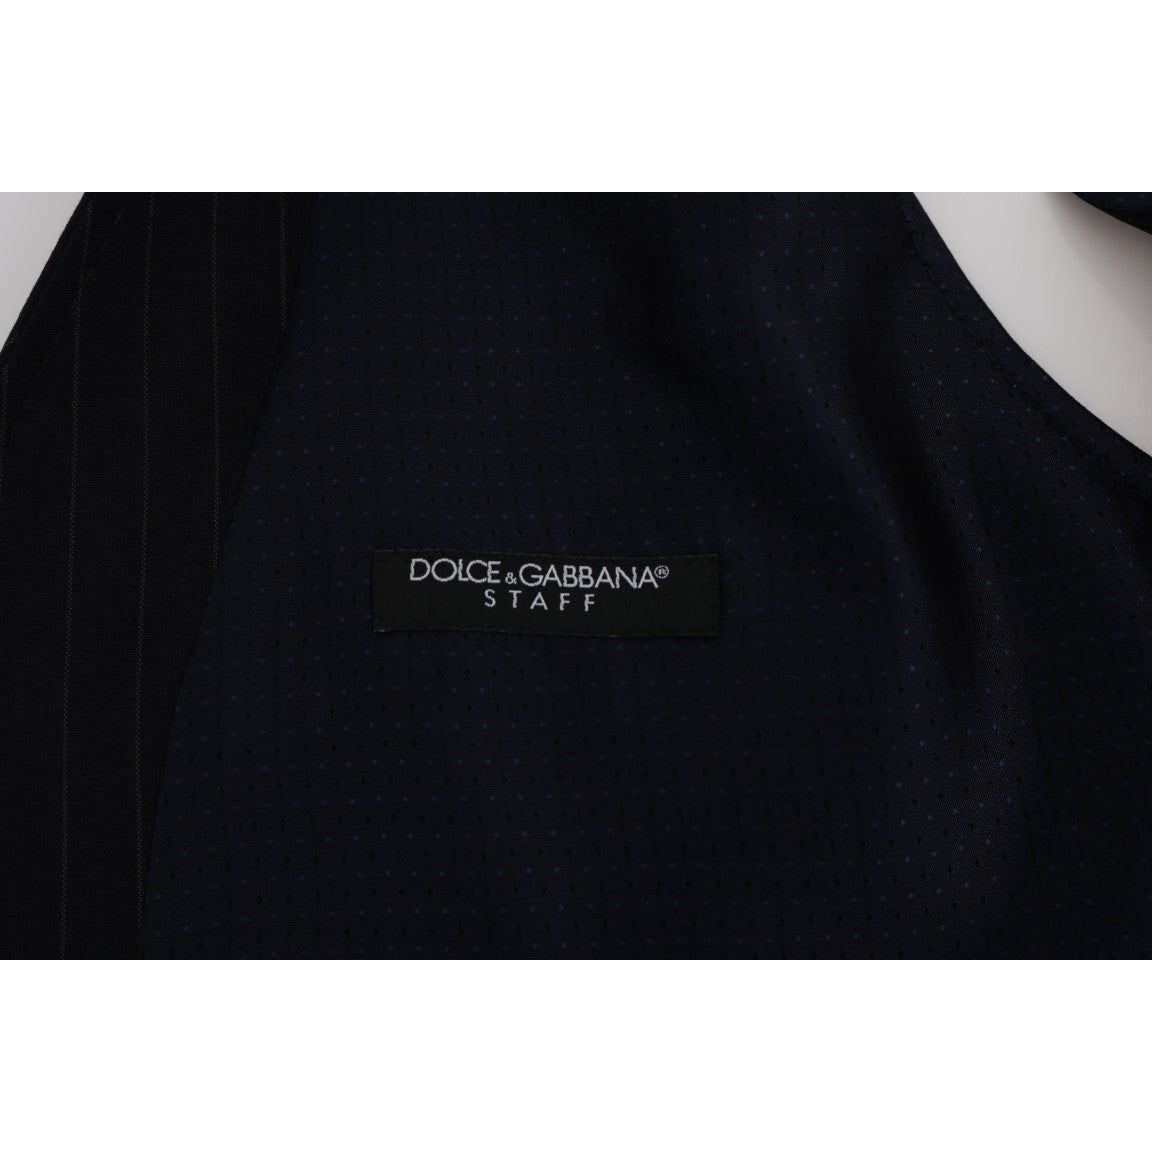 Dolce & Gabbana Elegant Blue Striped Waistcoat Vest blue-staff-wool-stretch-vest 498938-blue-staff-wool-stretch-vest-4.jpg